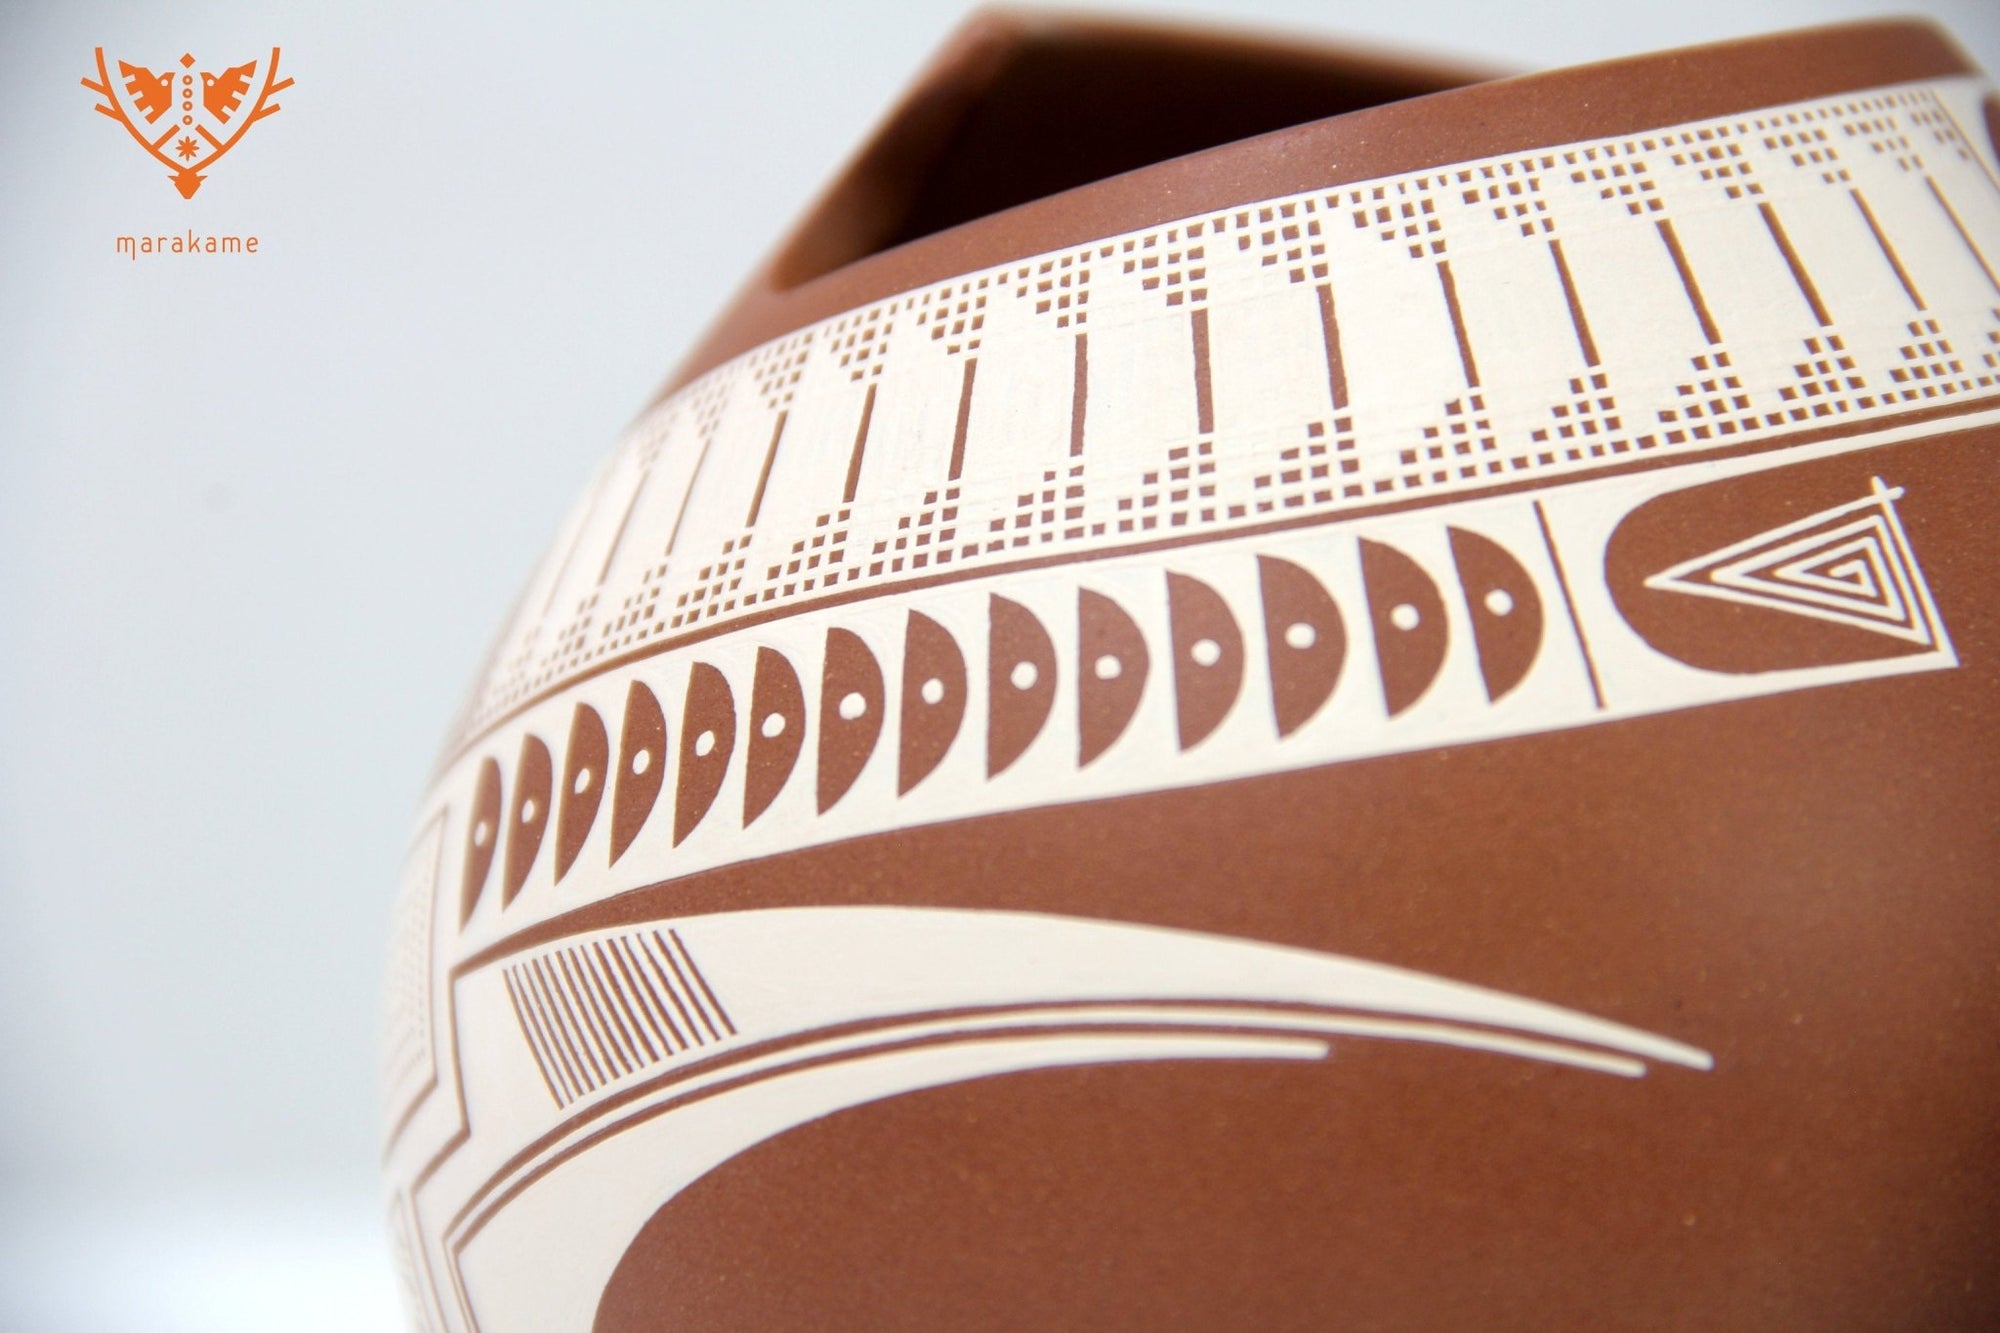 Mata Ortiz Keramik – Rotes Stück – Huichol-Kunst – Marakame